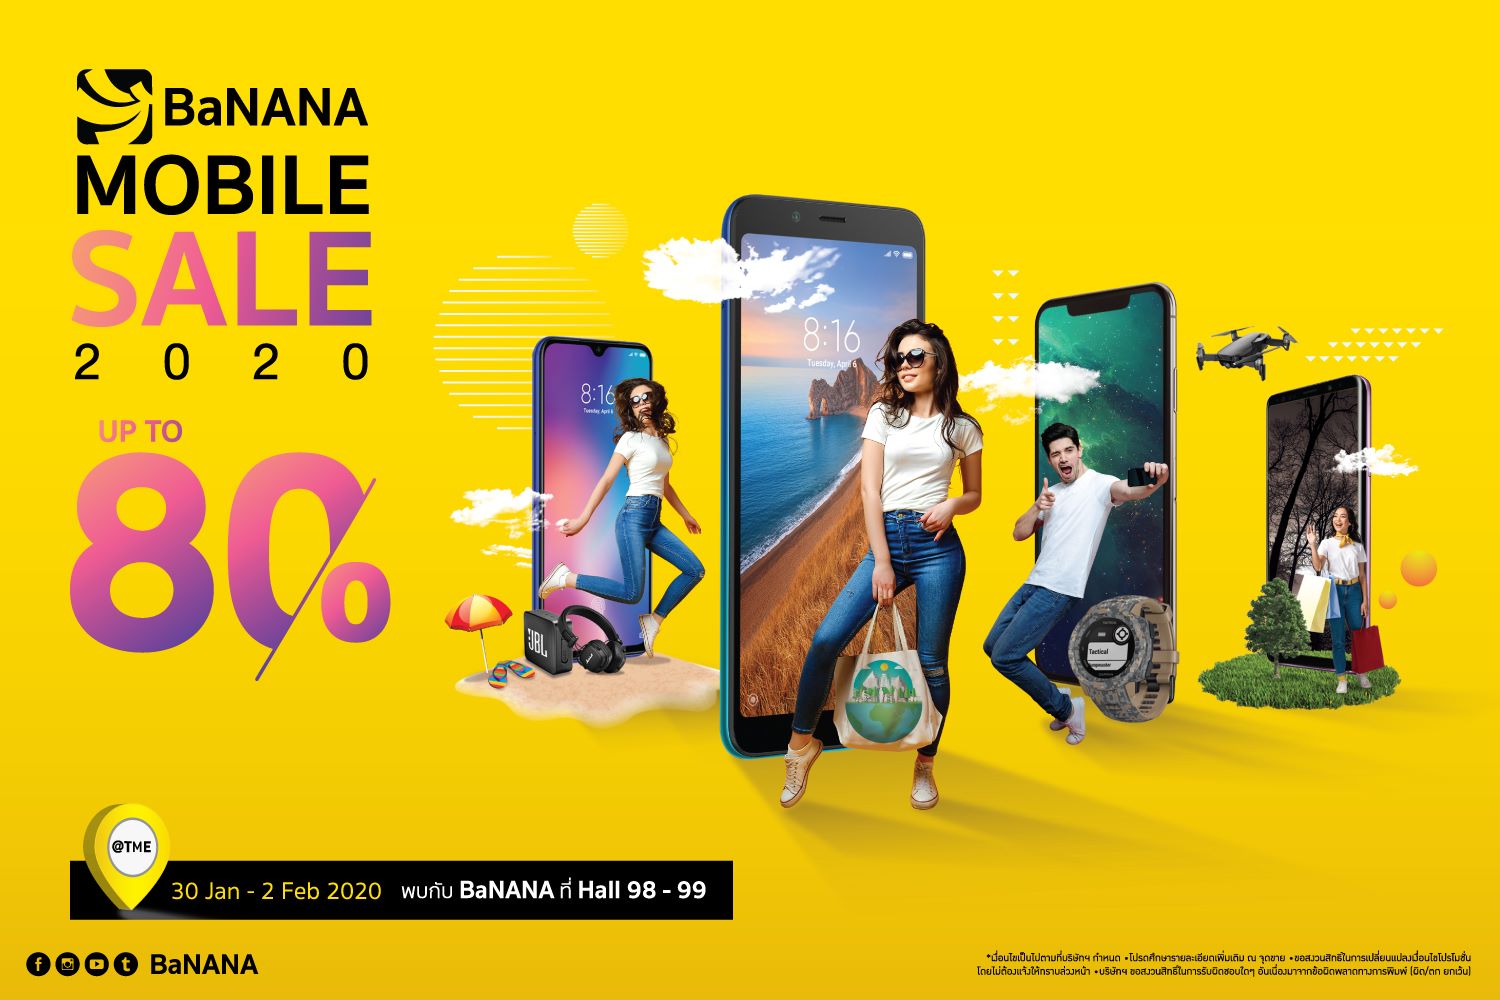 Promorion Banana Mobile sale 2020 Mobile expo